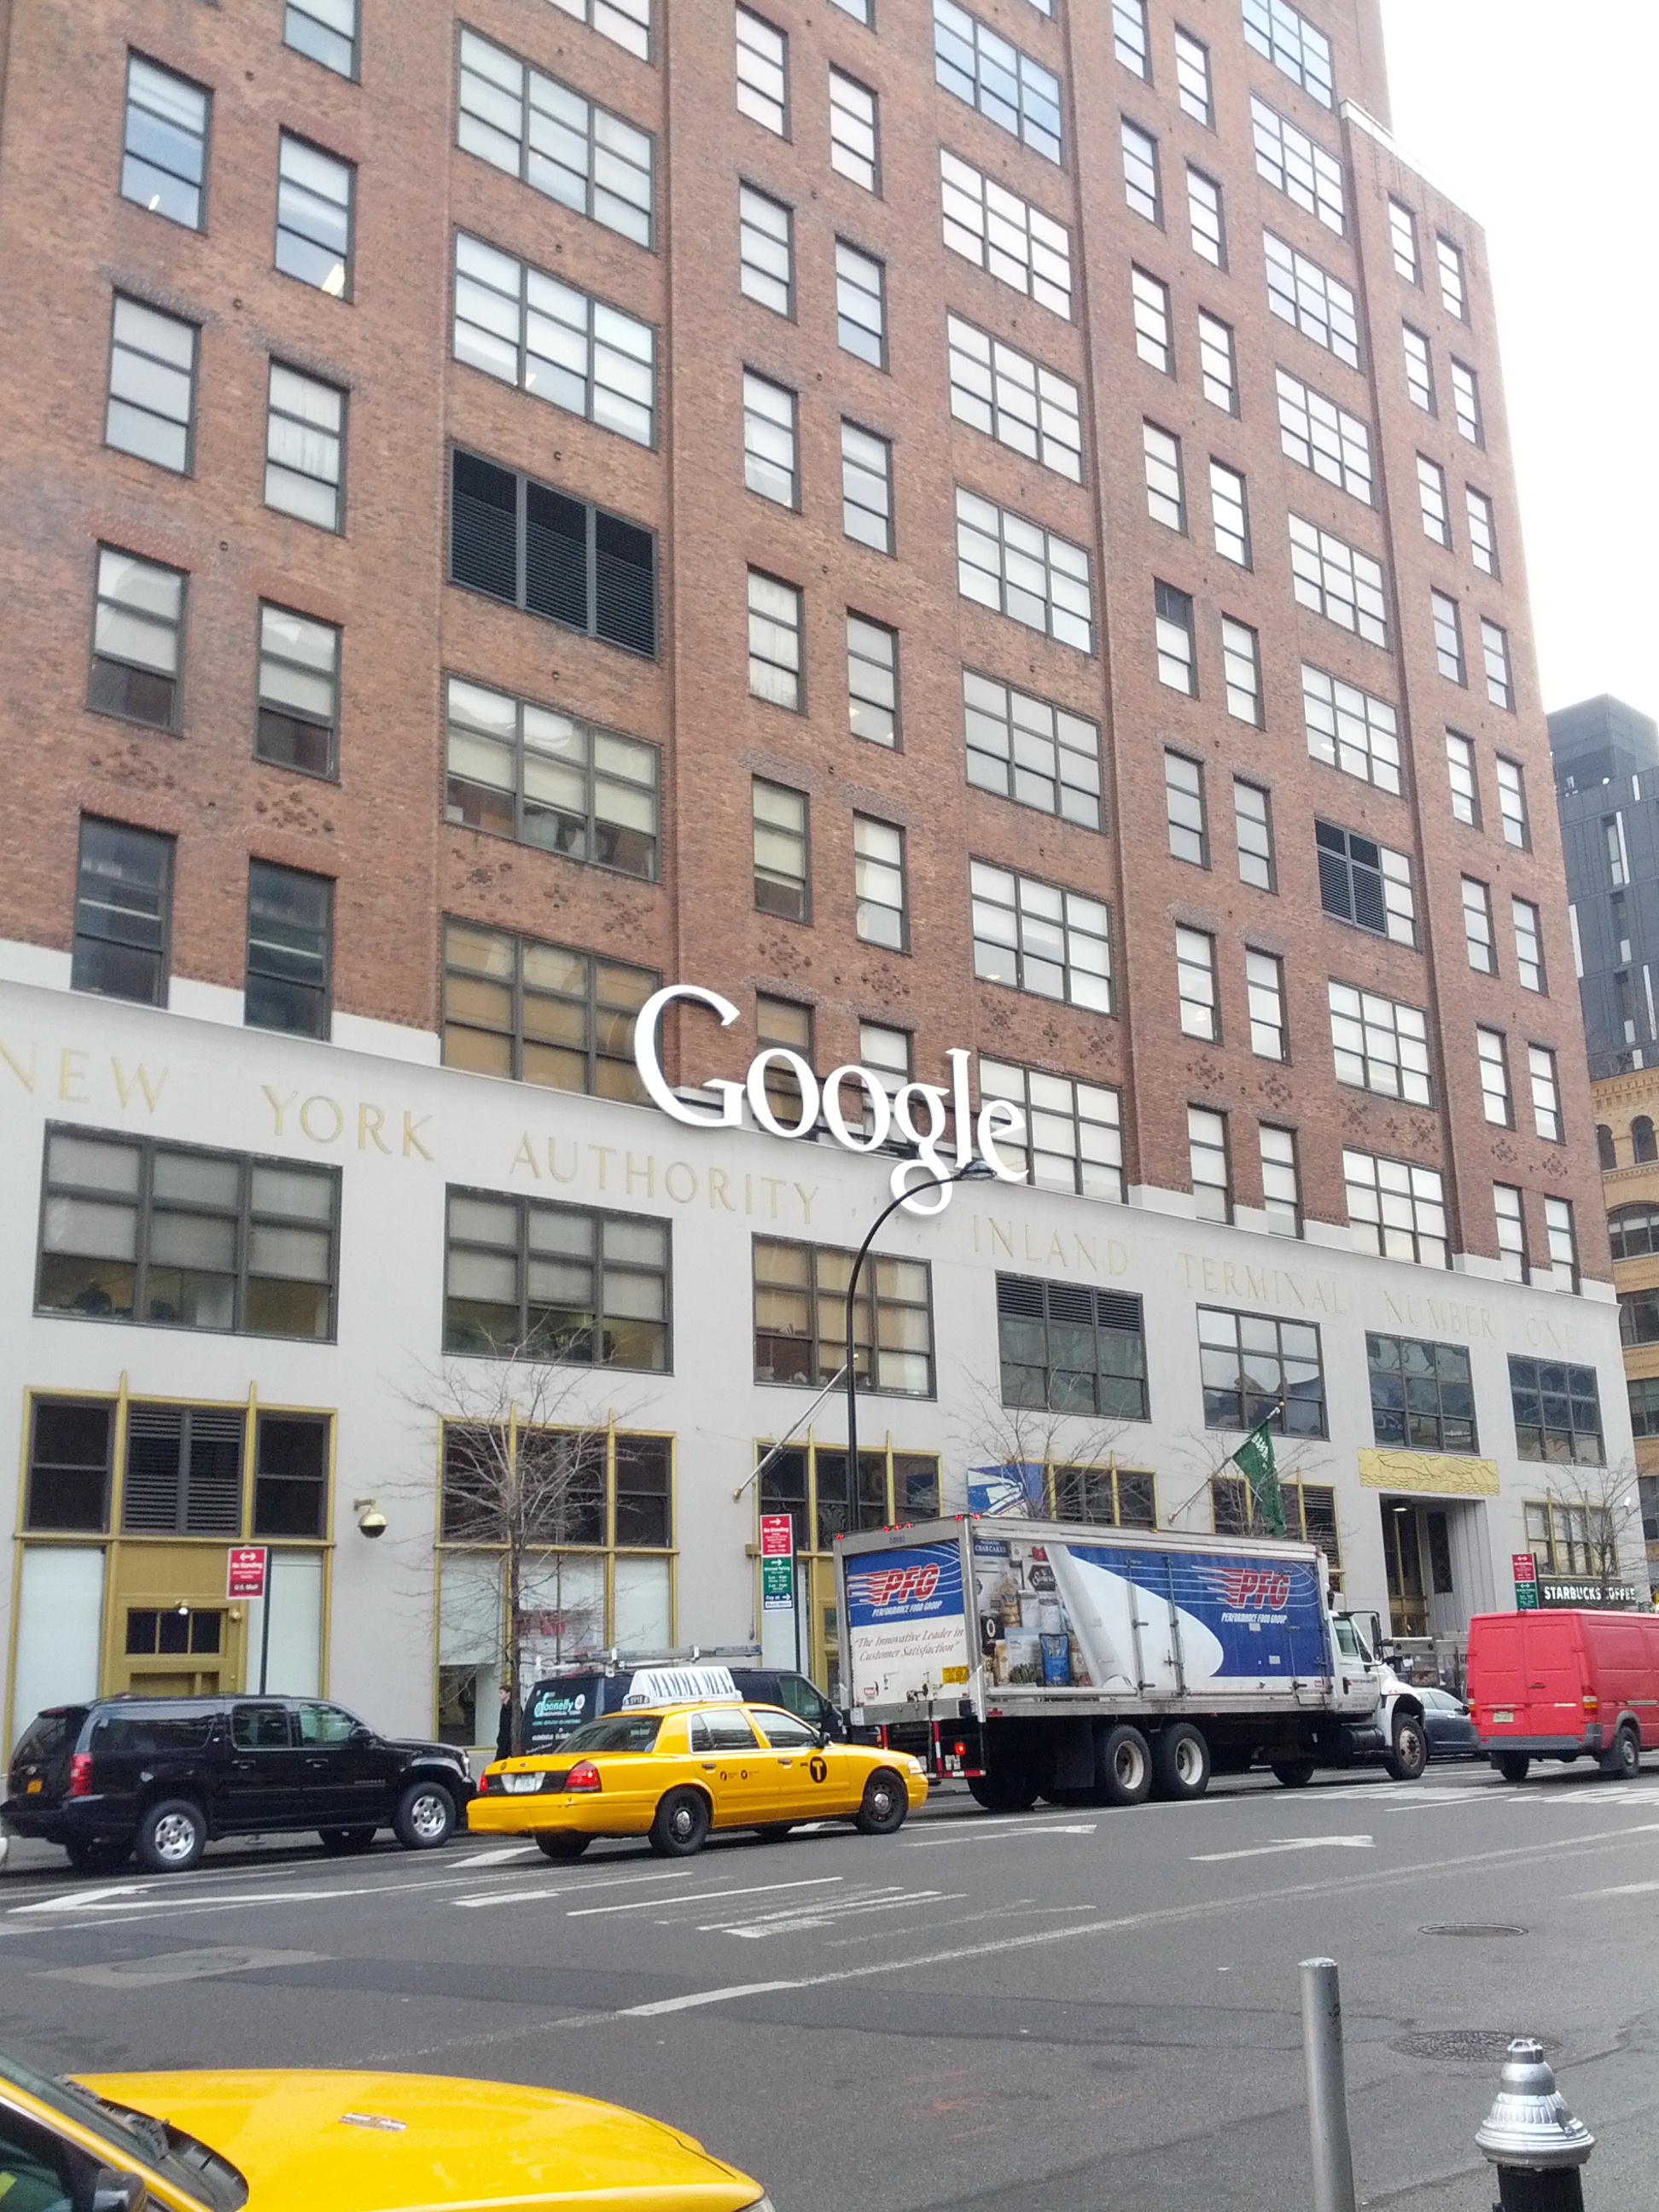 Google New York offices